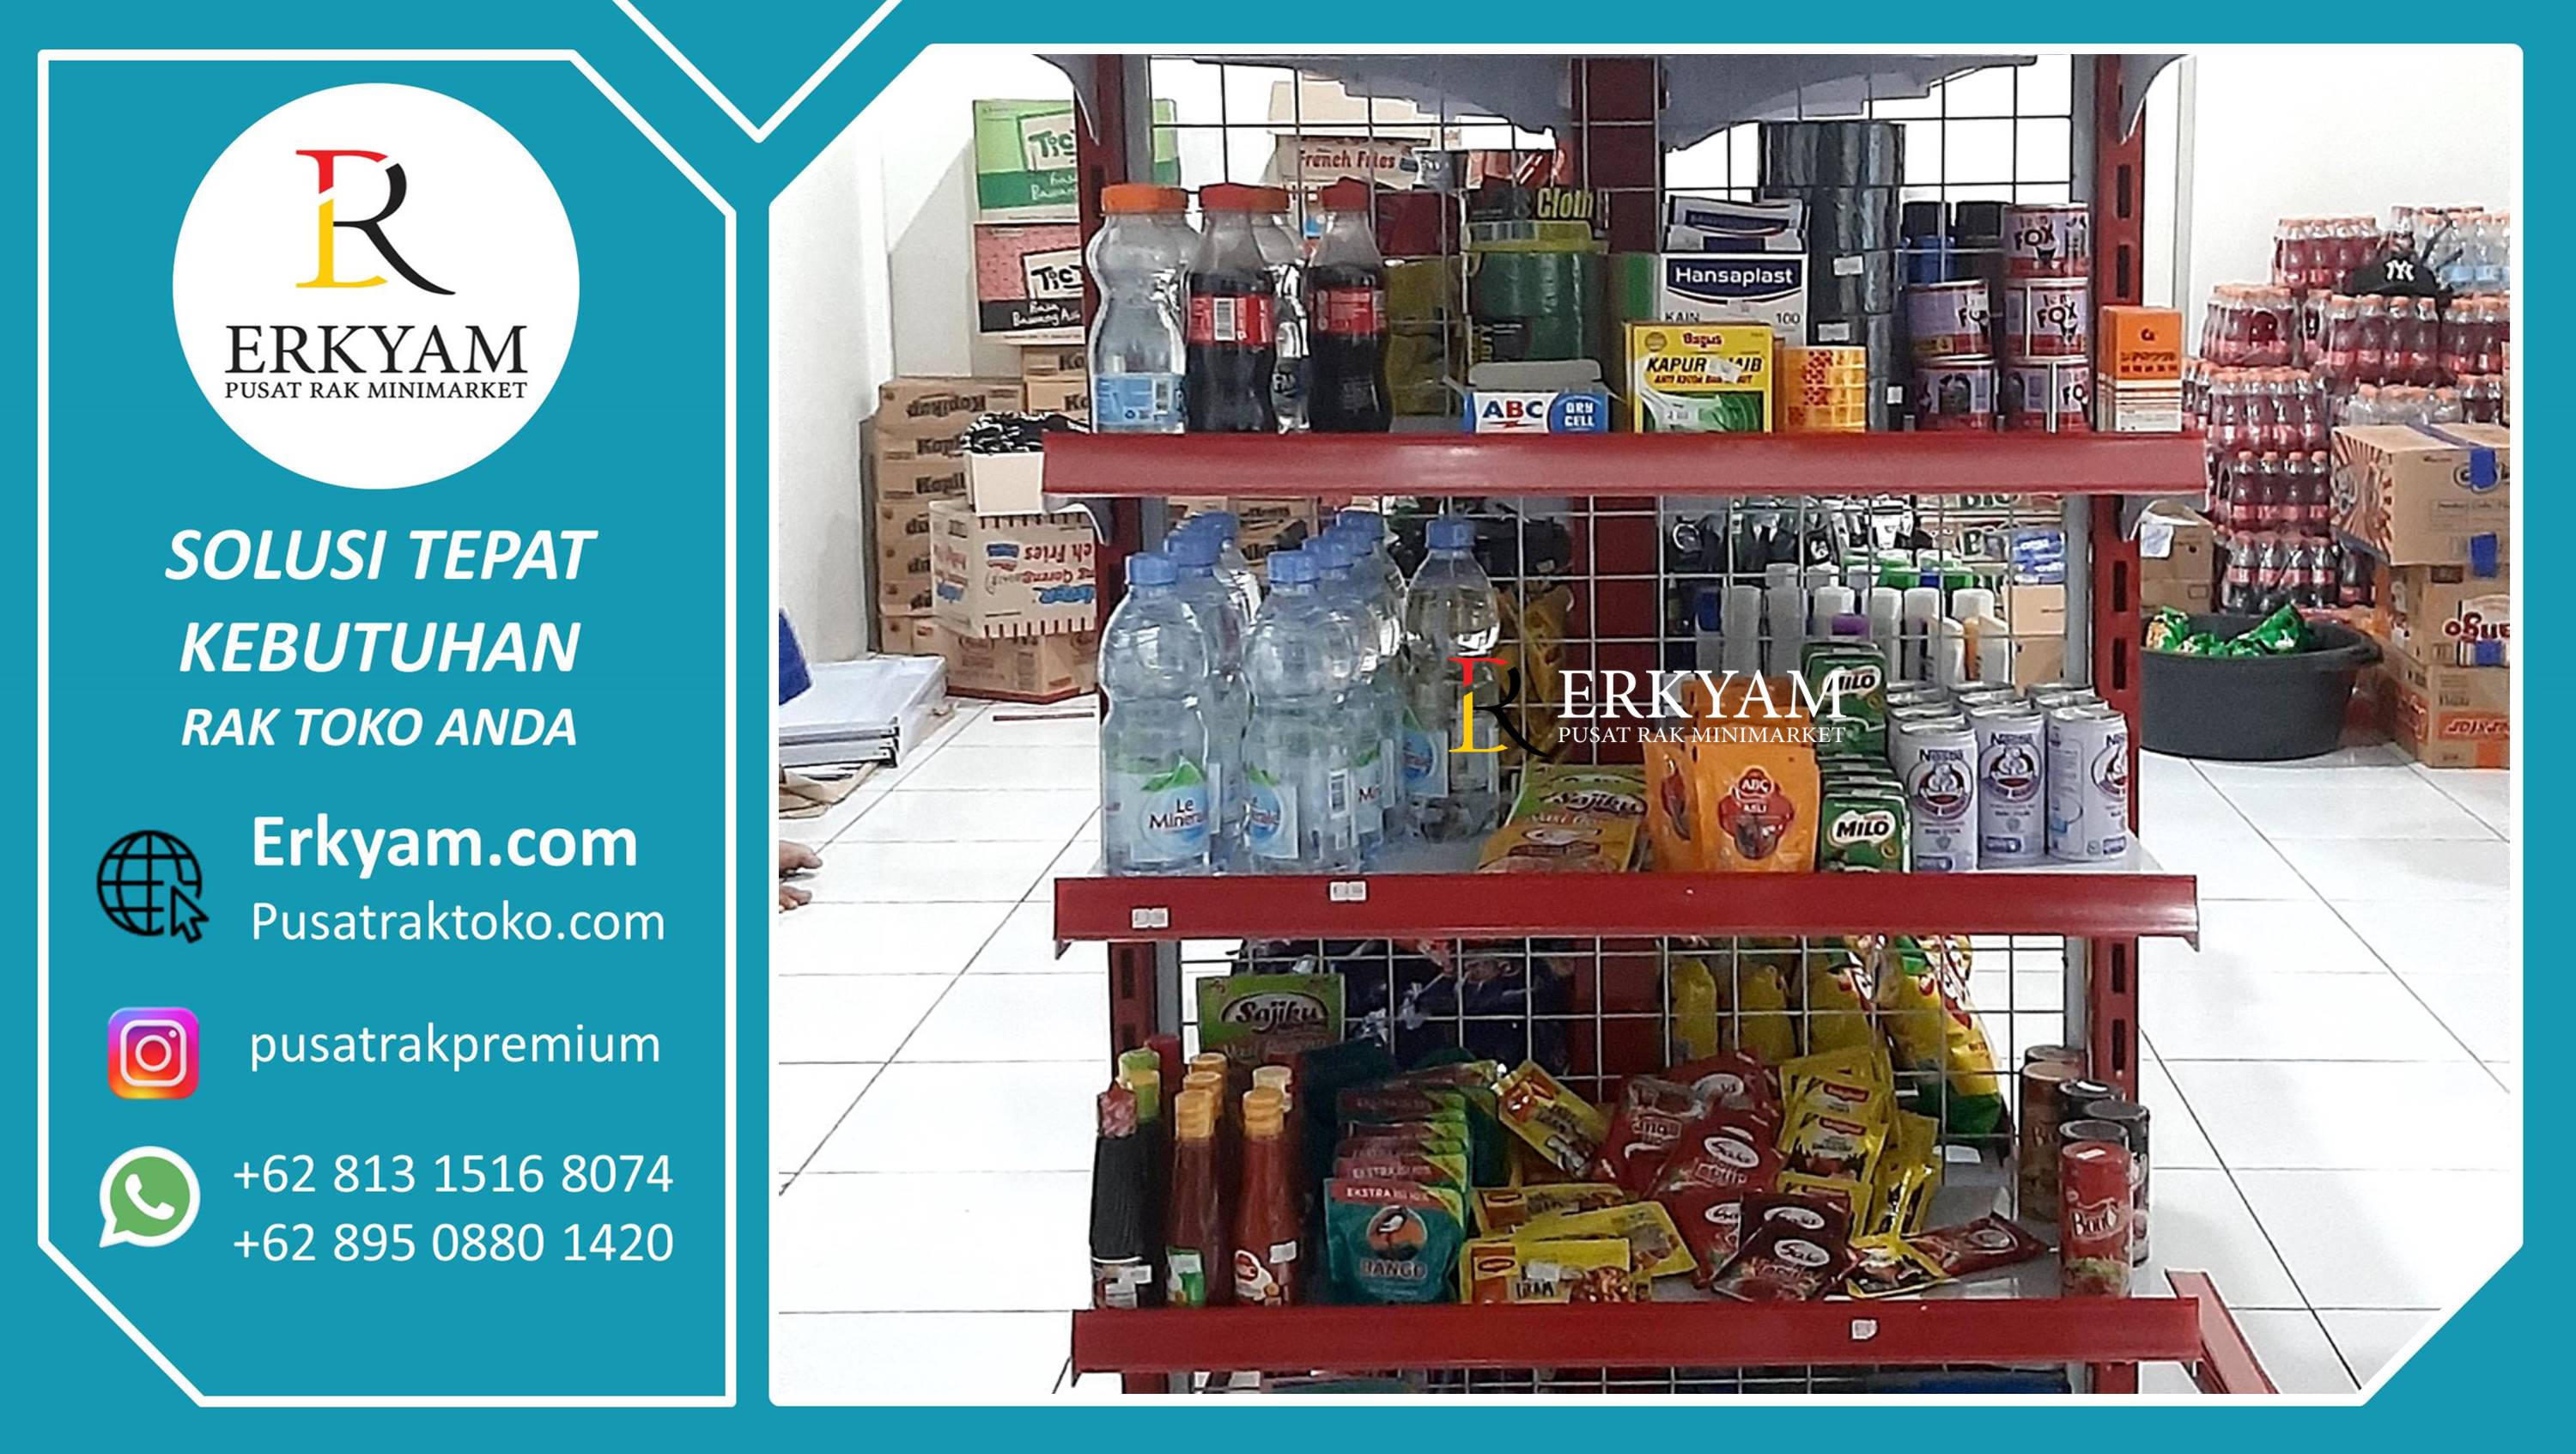 ERKYAM Pusat Rak Minimarket area Soppeng Sulawesi Selatan